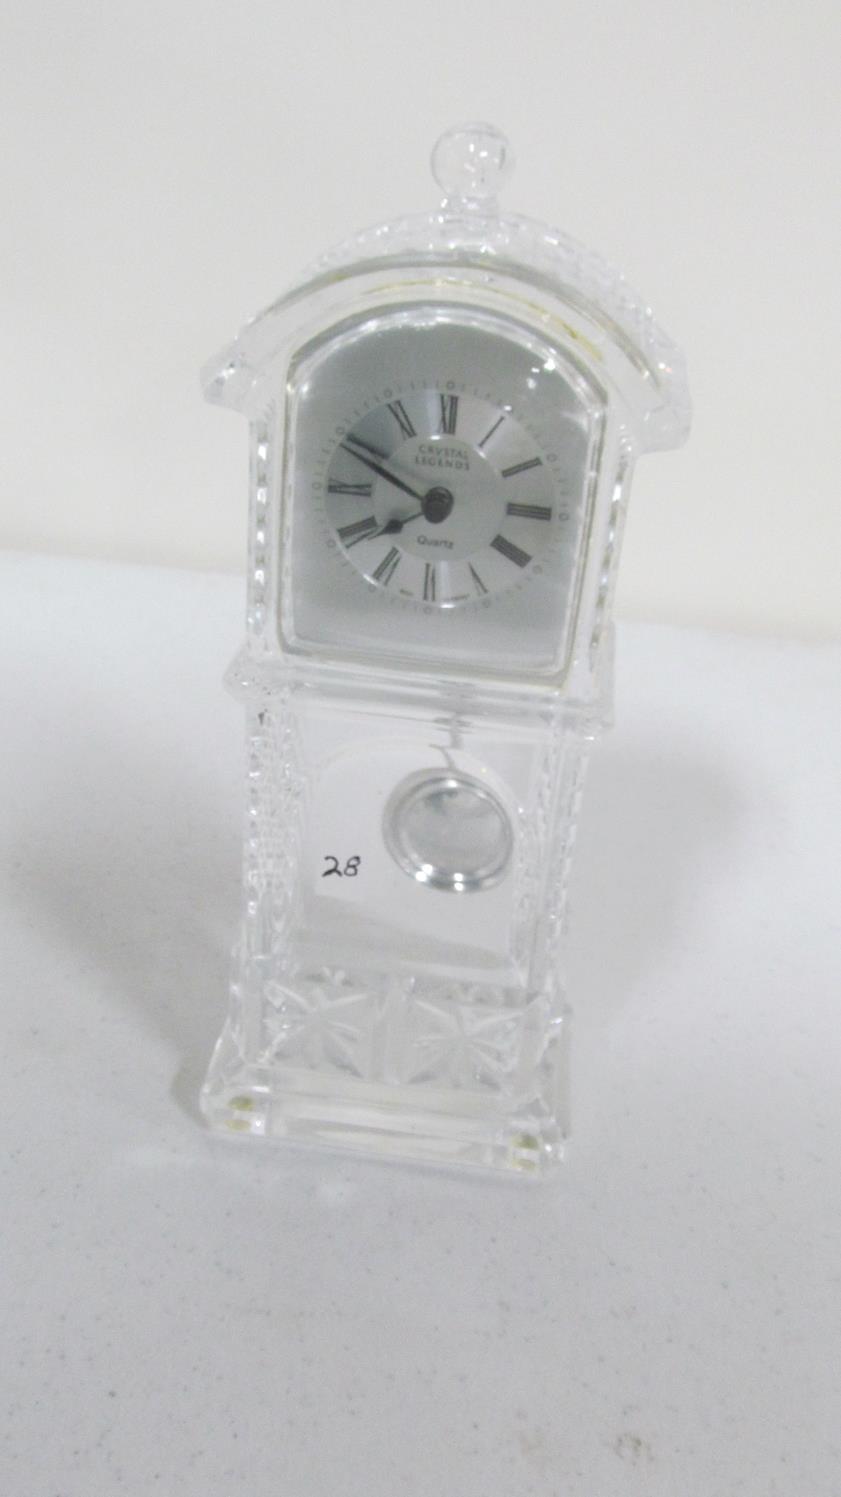 Crystal Legends 10.75" quartz clock made in West Germany